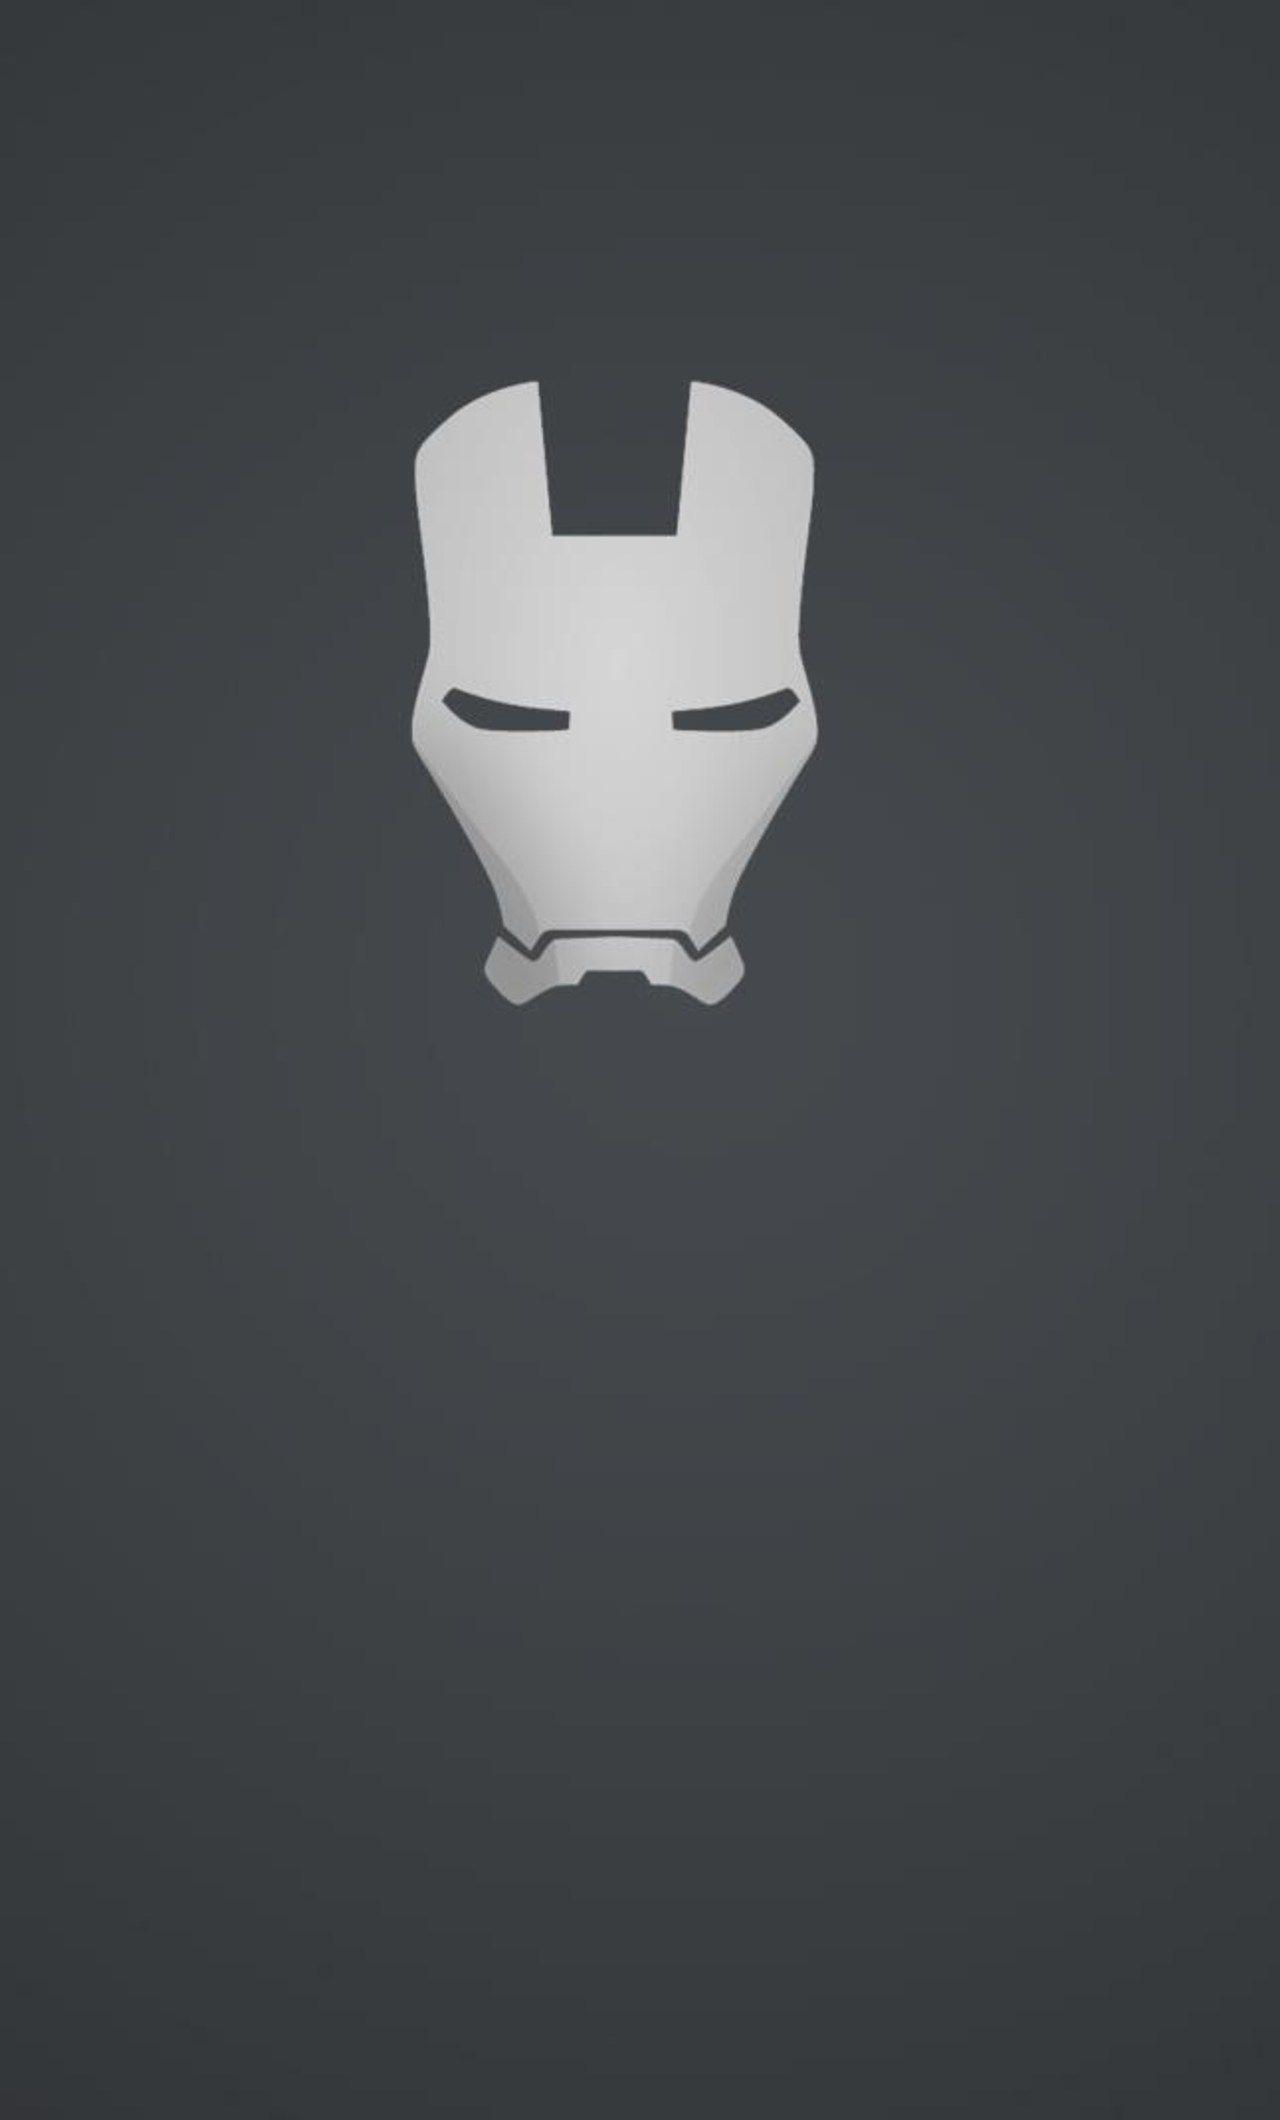 Iron Man Simple 3 iPhone 6 HD 4k Wallpaper, Image HD